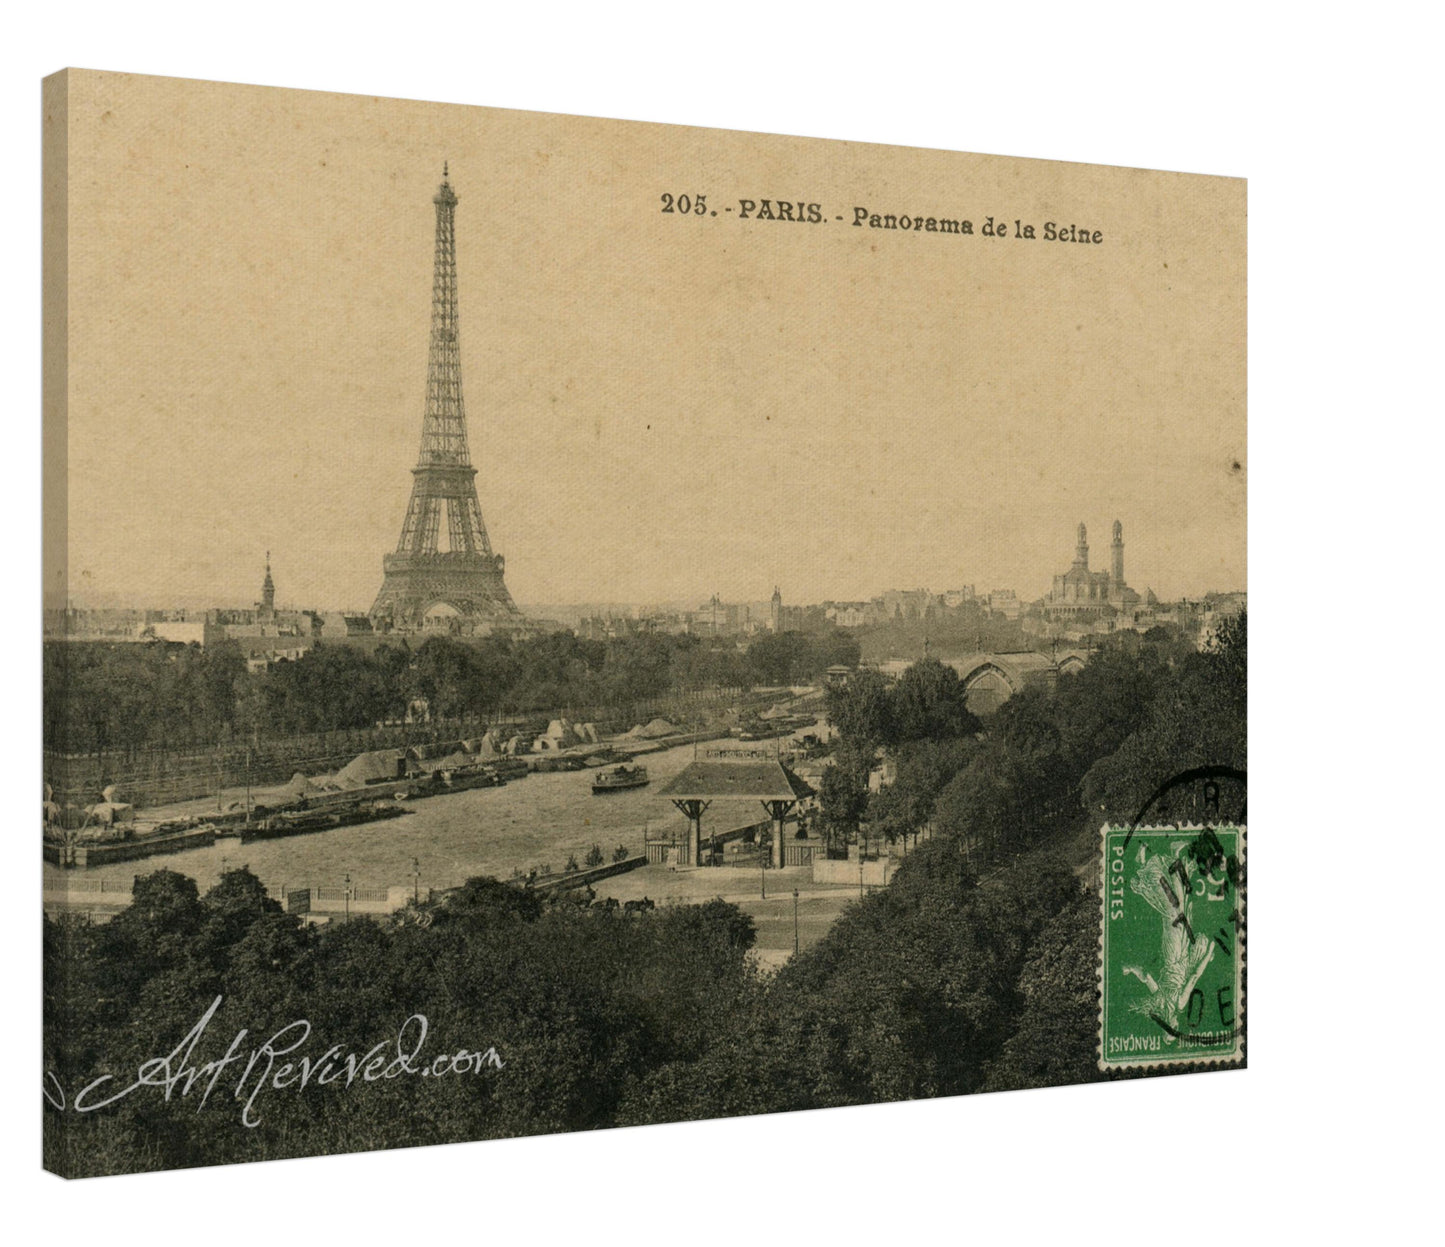 The Eiffel Tower Panorama de la Seine